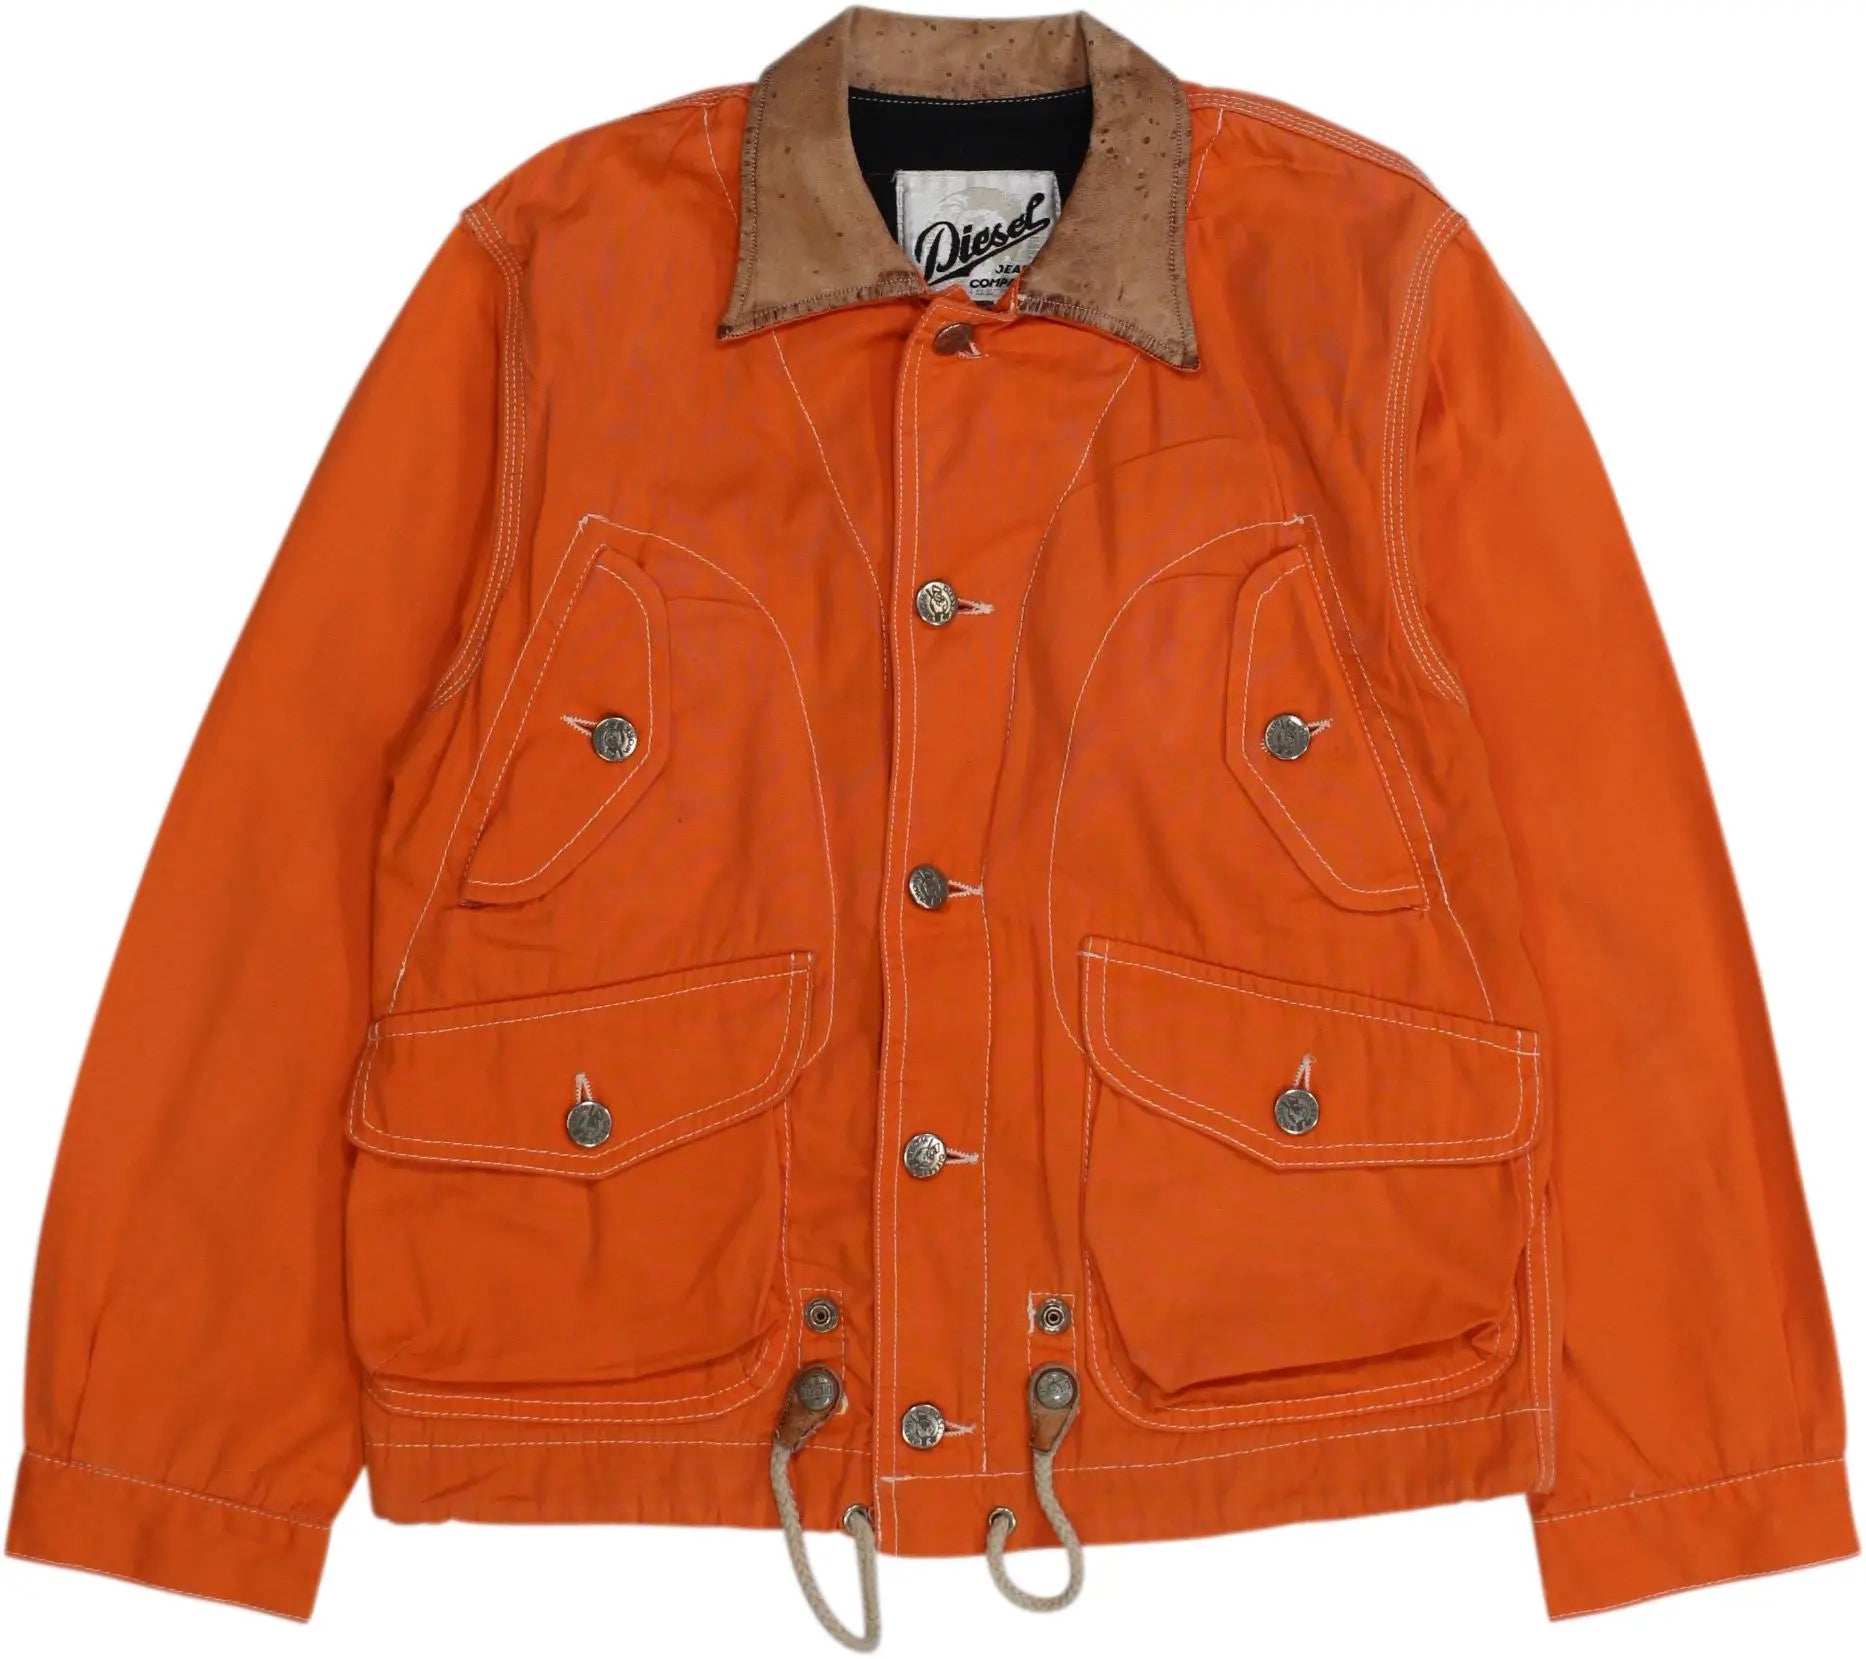 Diesel - Orange Jacket by Diesel- ThriftTale.com - Vintage and second handclothing